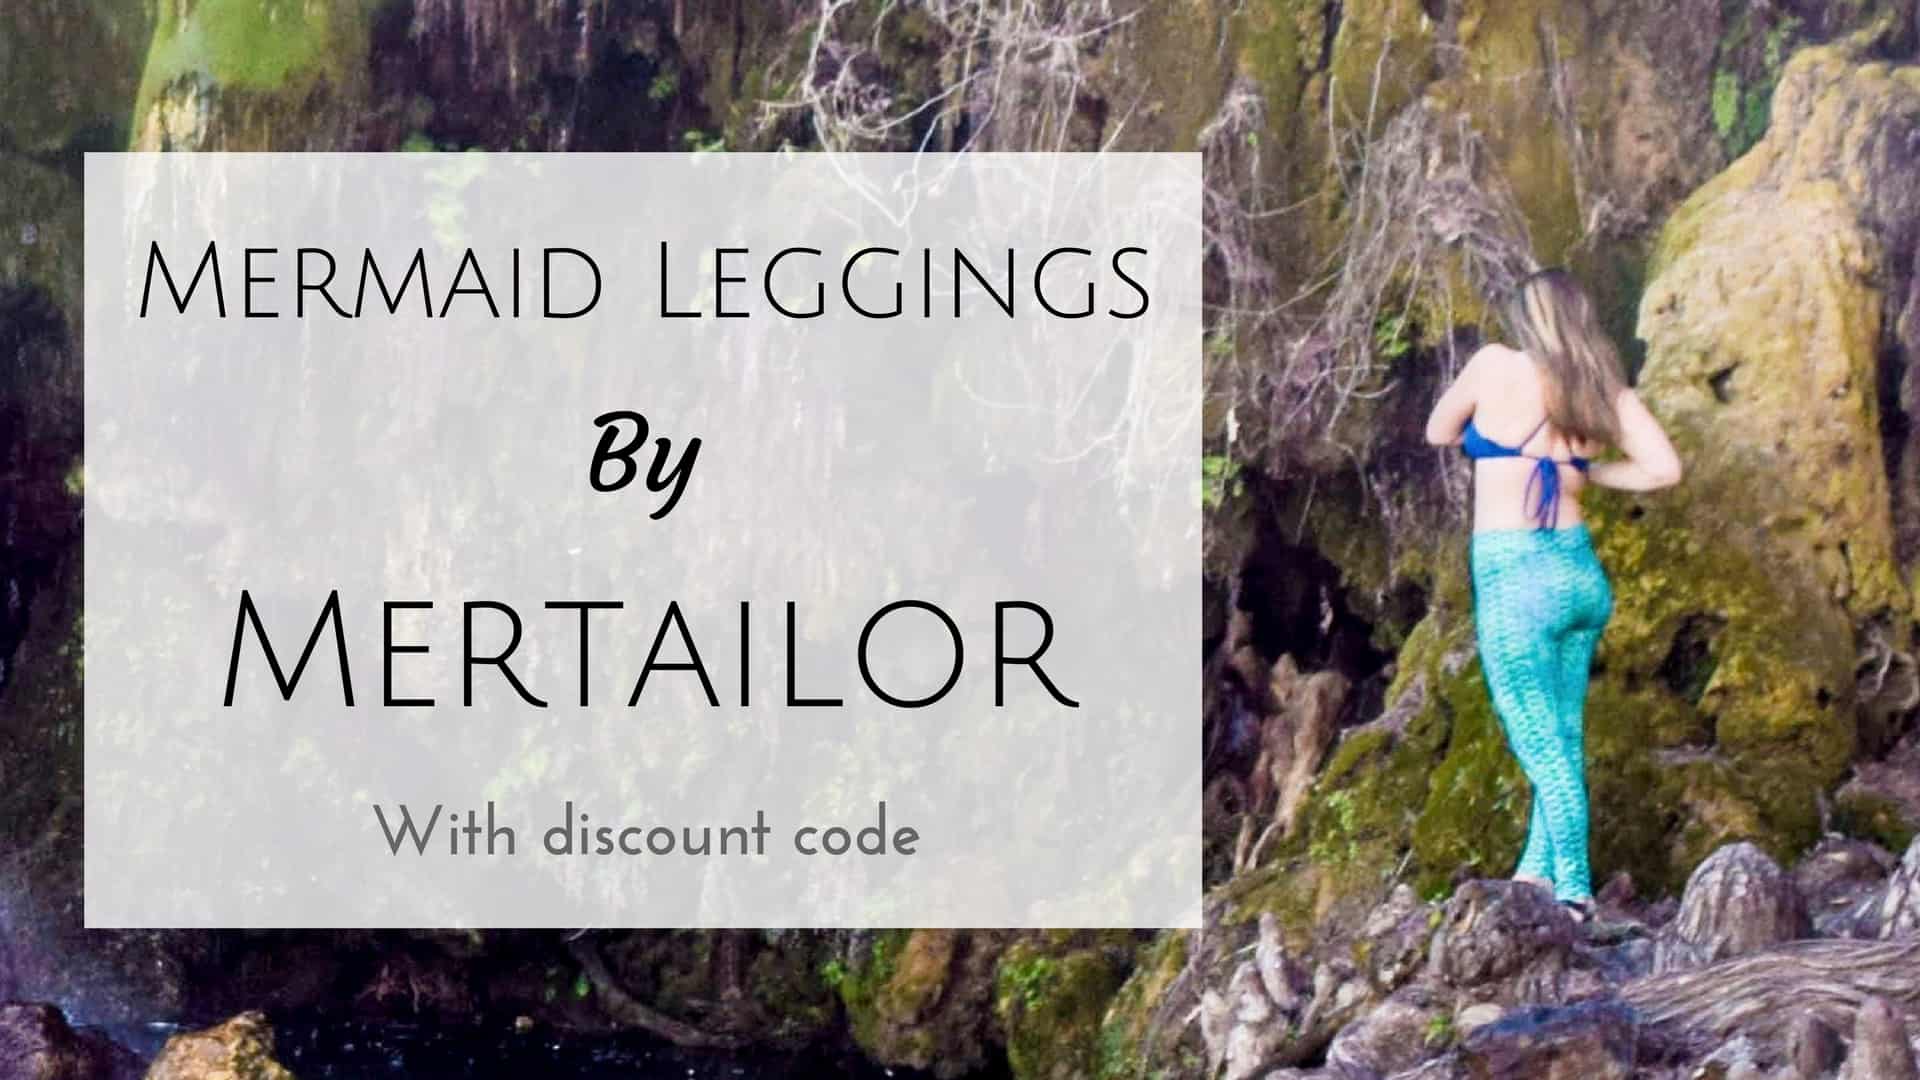 Mermaid Leggings By Mertailor - Review & Discount Promo Code